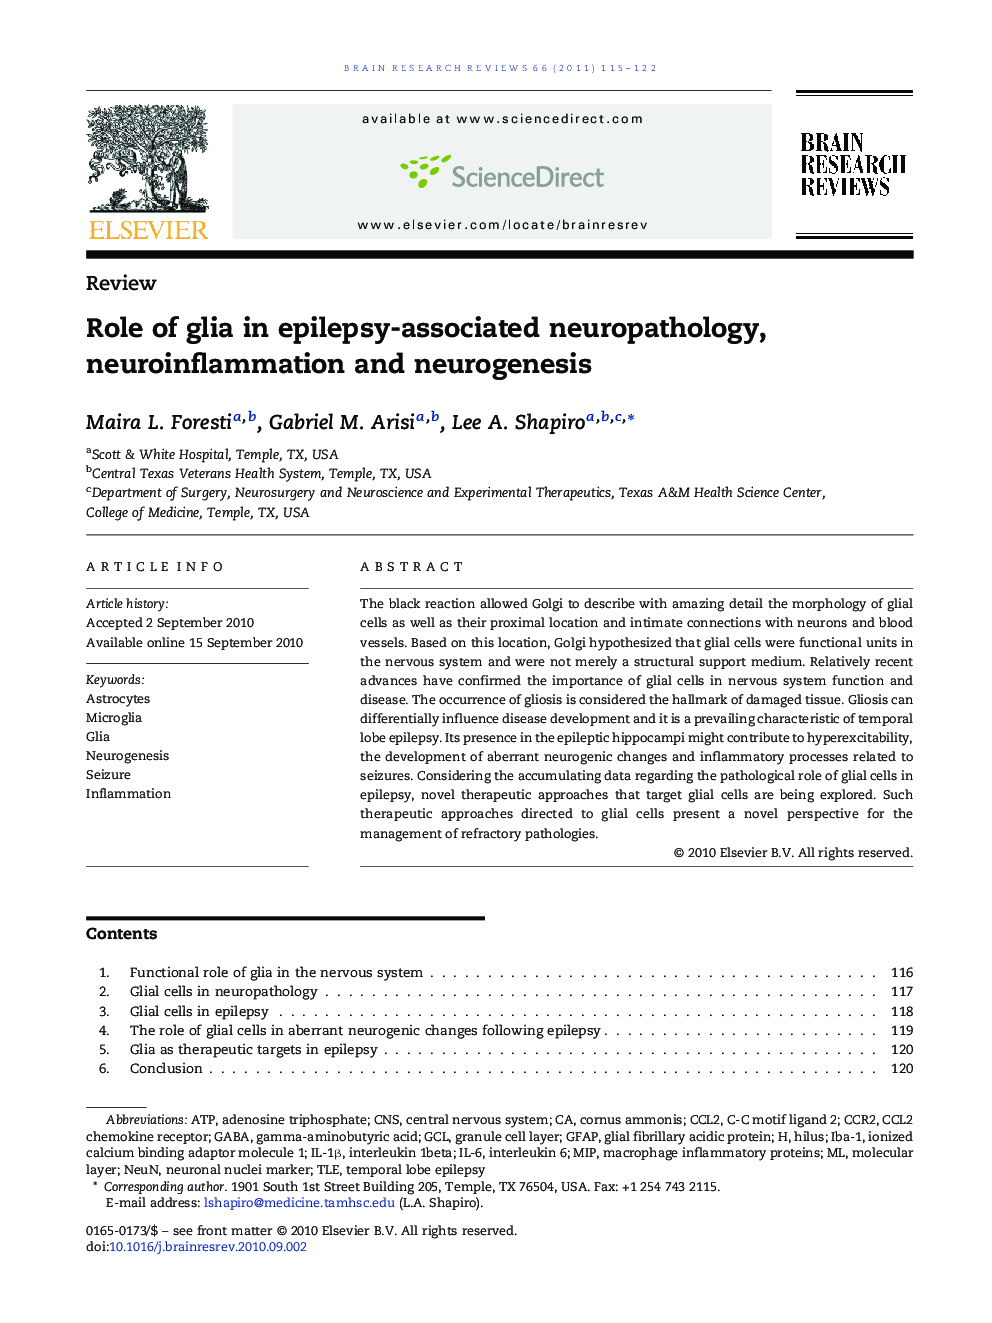 Role of glia in epilepsy-associated neuropathology, neuroinflammation and neurogenesis